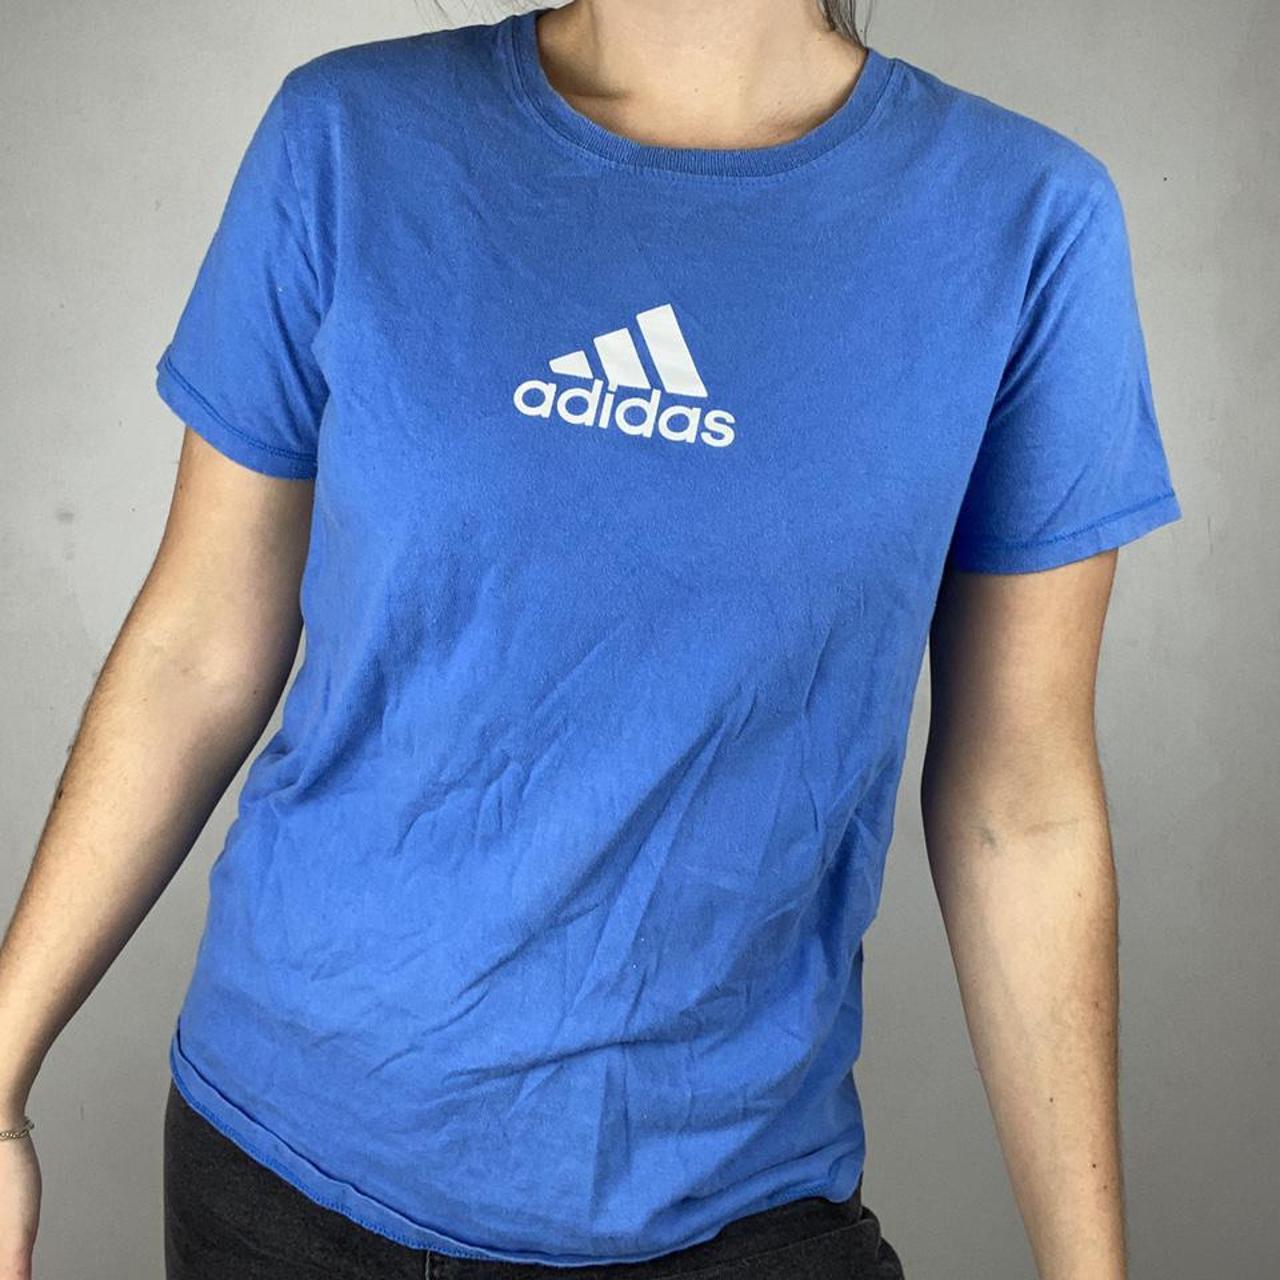 Product Image 1 - Adidas Tee💙
This adorable Adidas T-shirt